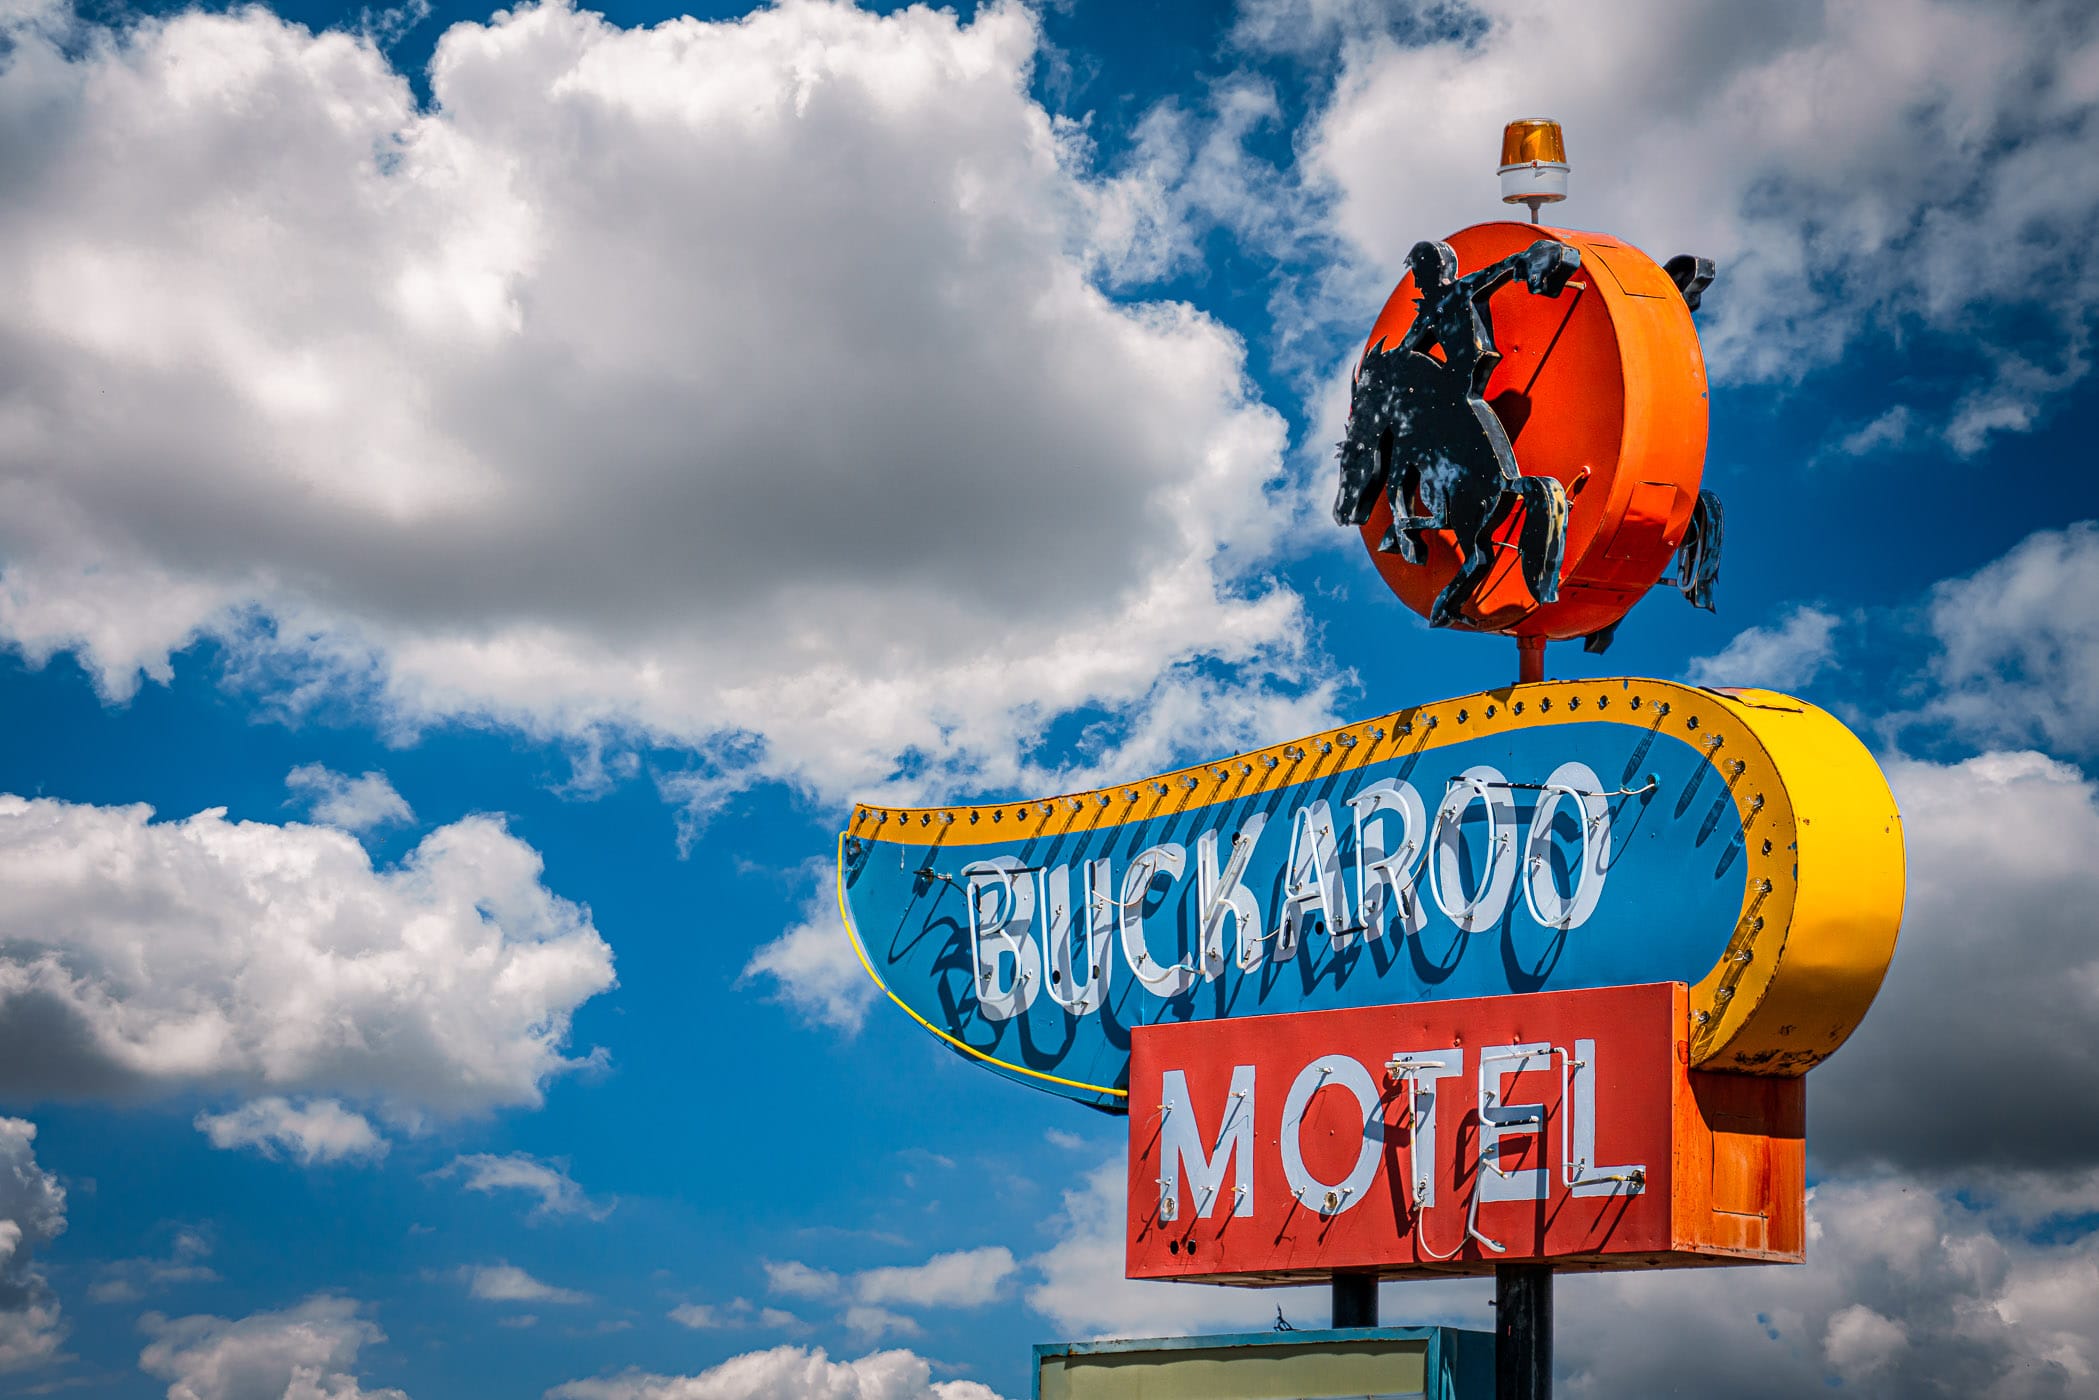 The sign of Tucumcari, New Mexico's Buckaroo Motel.